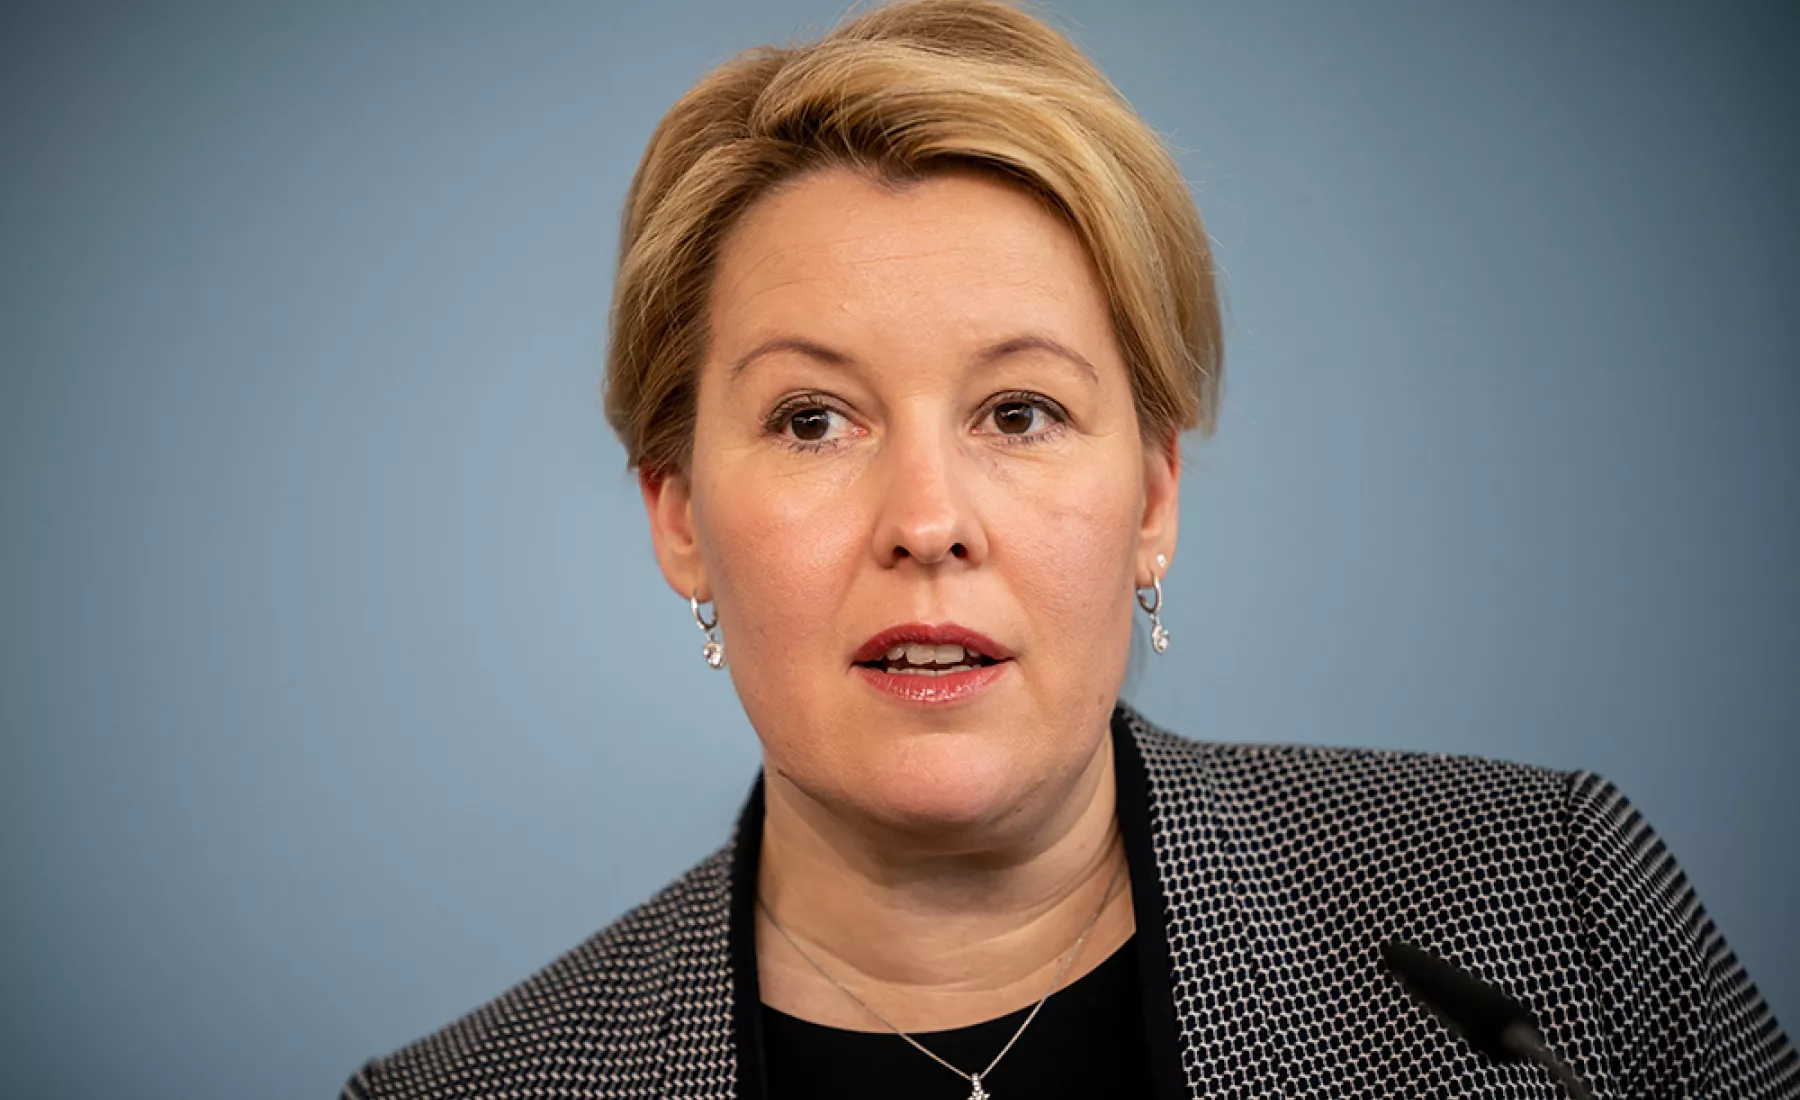 Bundesfamilienministerin Franziska Giffey